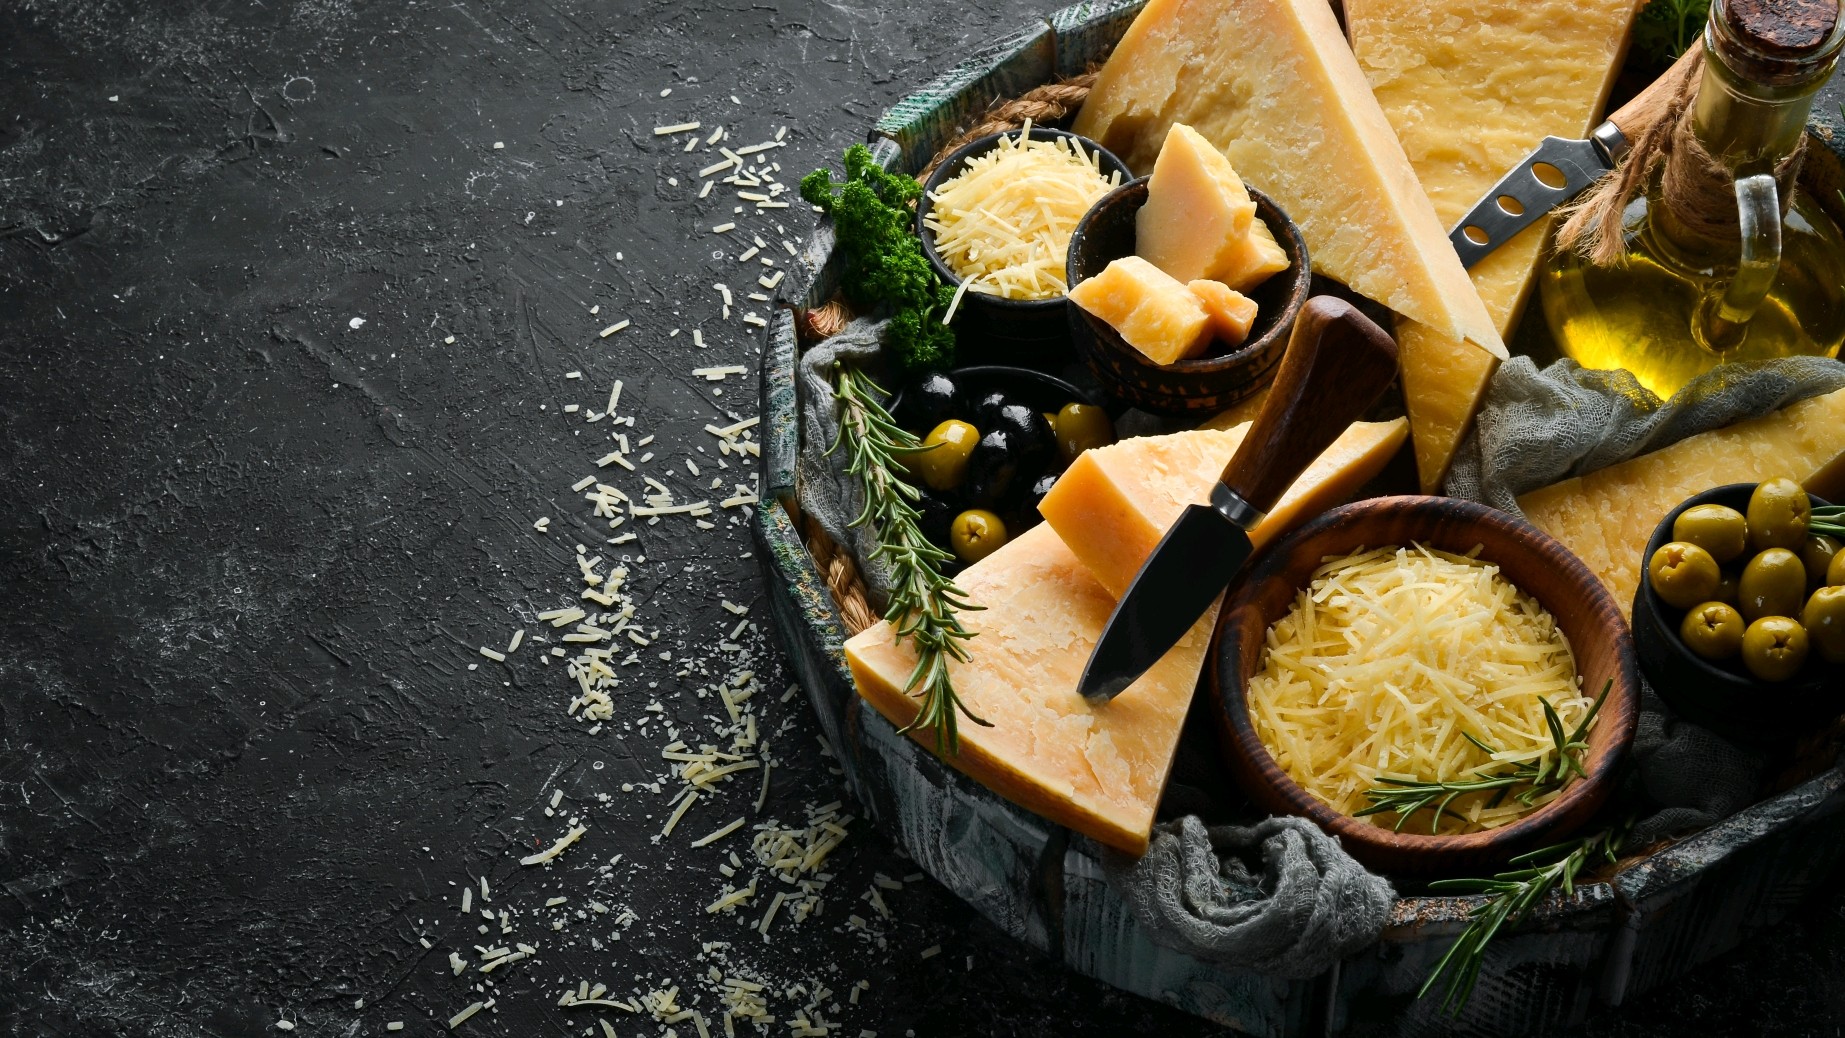 The best cheeses in Croatia - Gligora